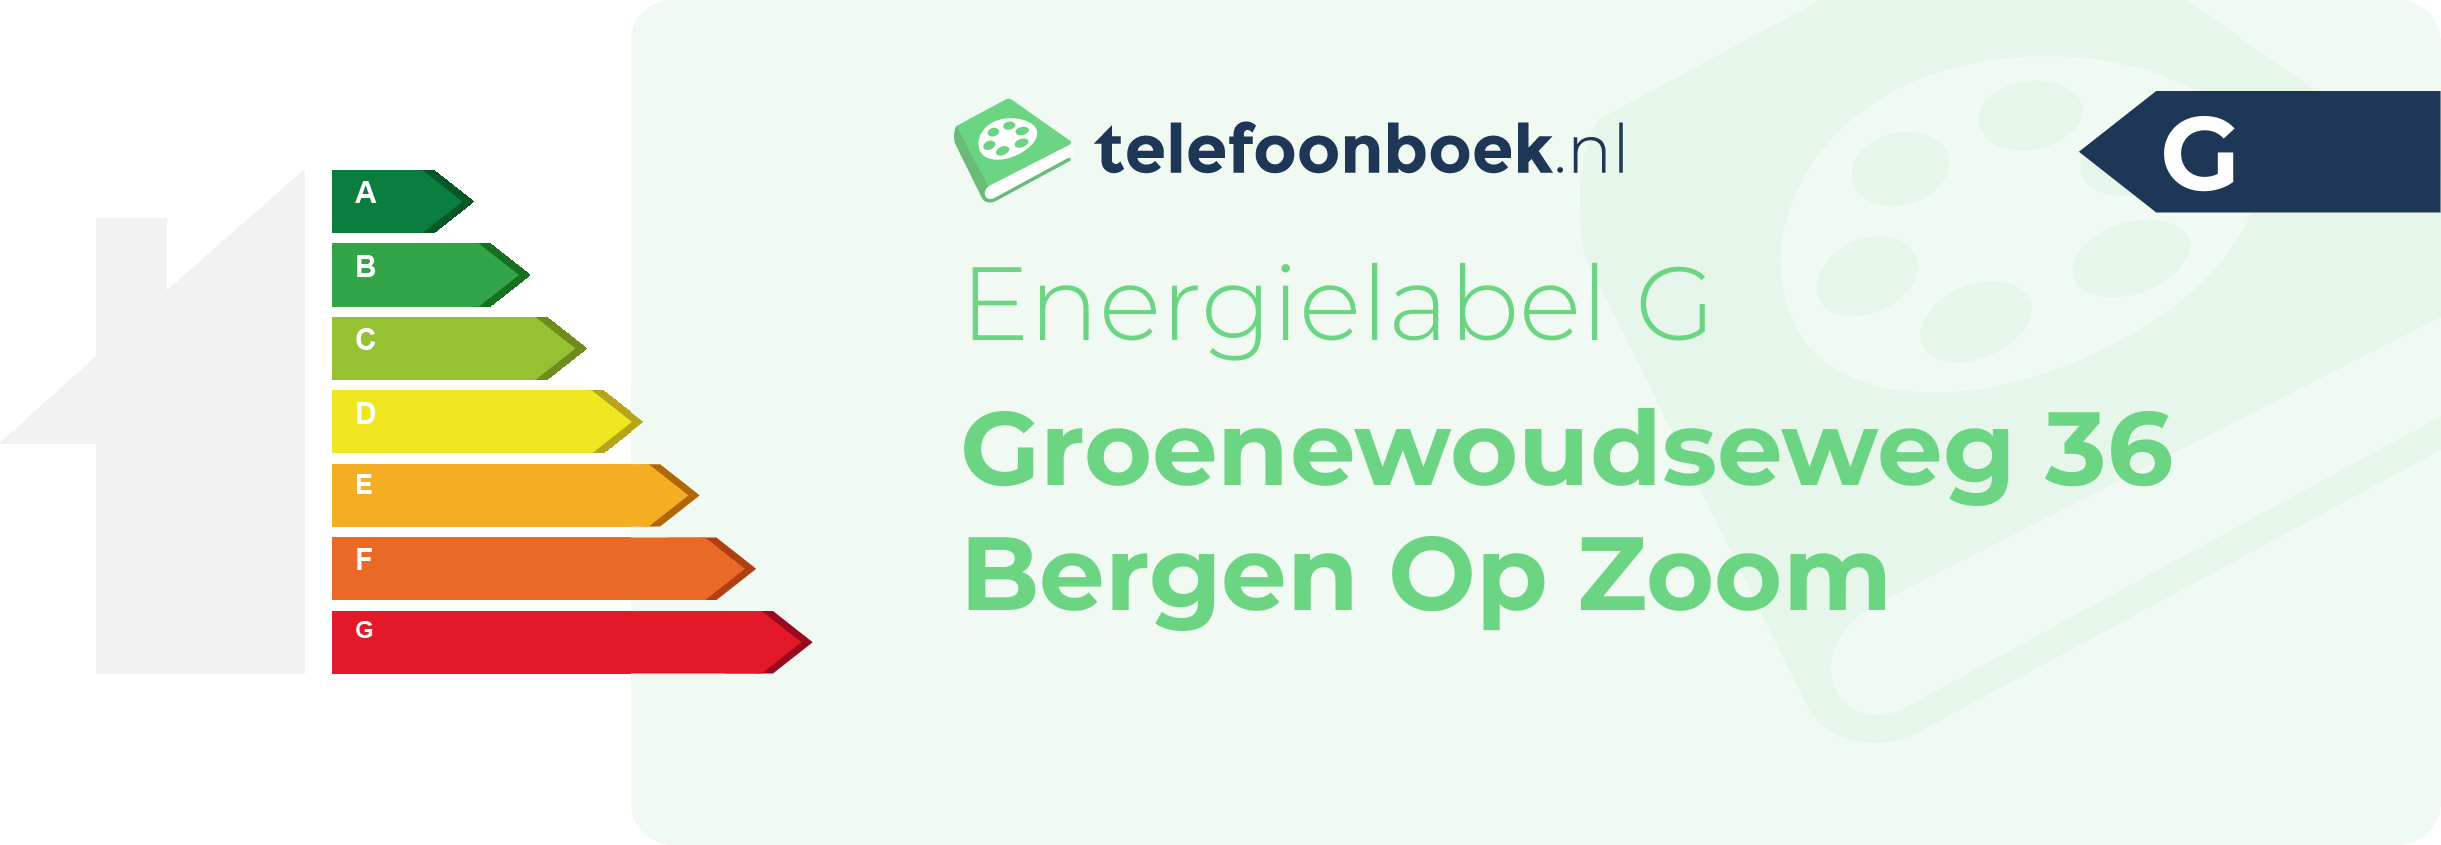 Energielabel Groenewoudseweg 36 Bergen Op Zoom